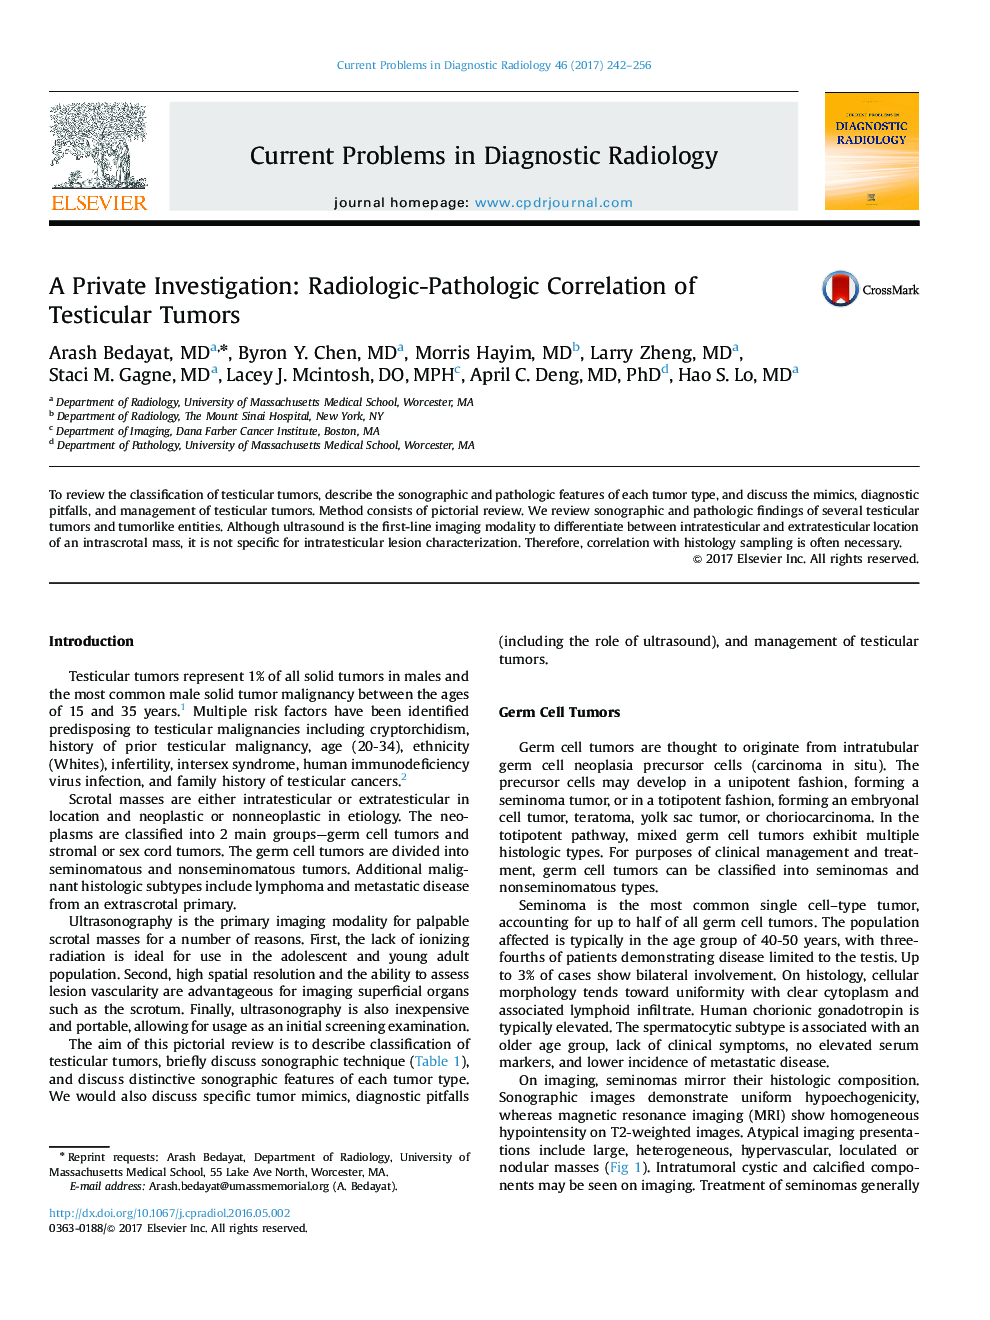 A Private Investigation: Radiologic-Pathologic Correlation of Testicular Tumors